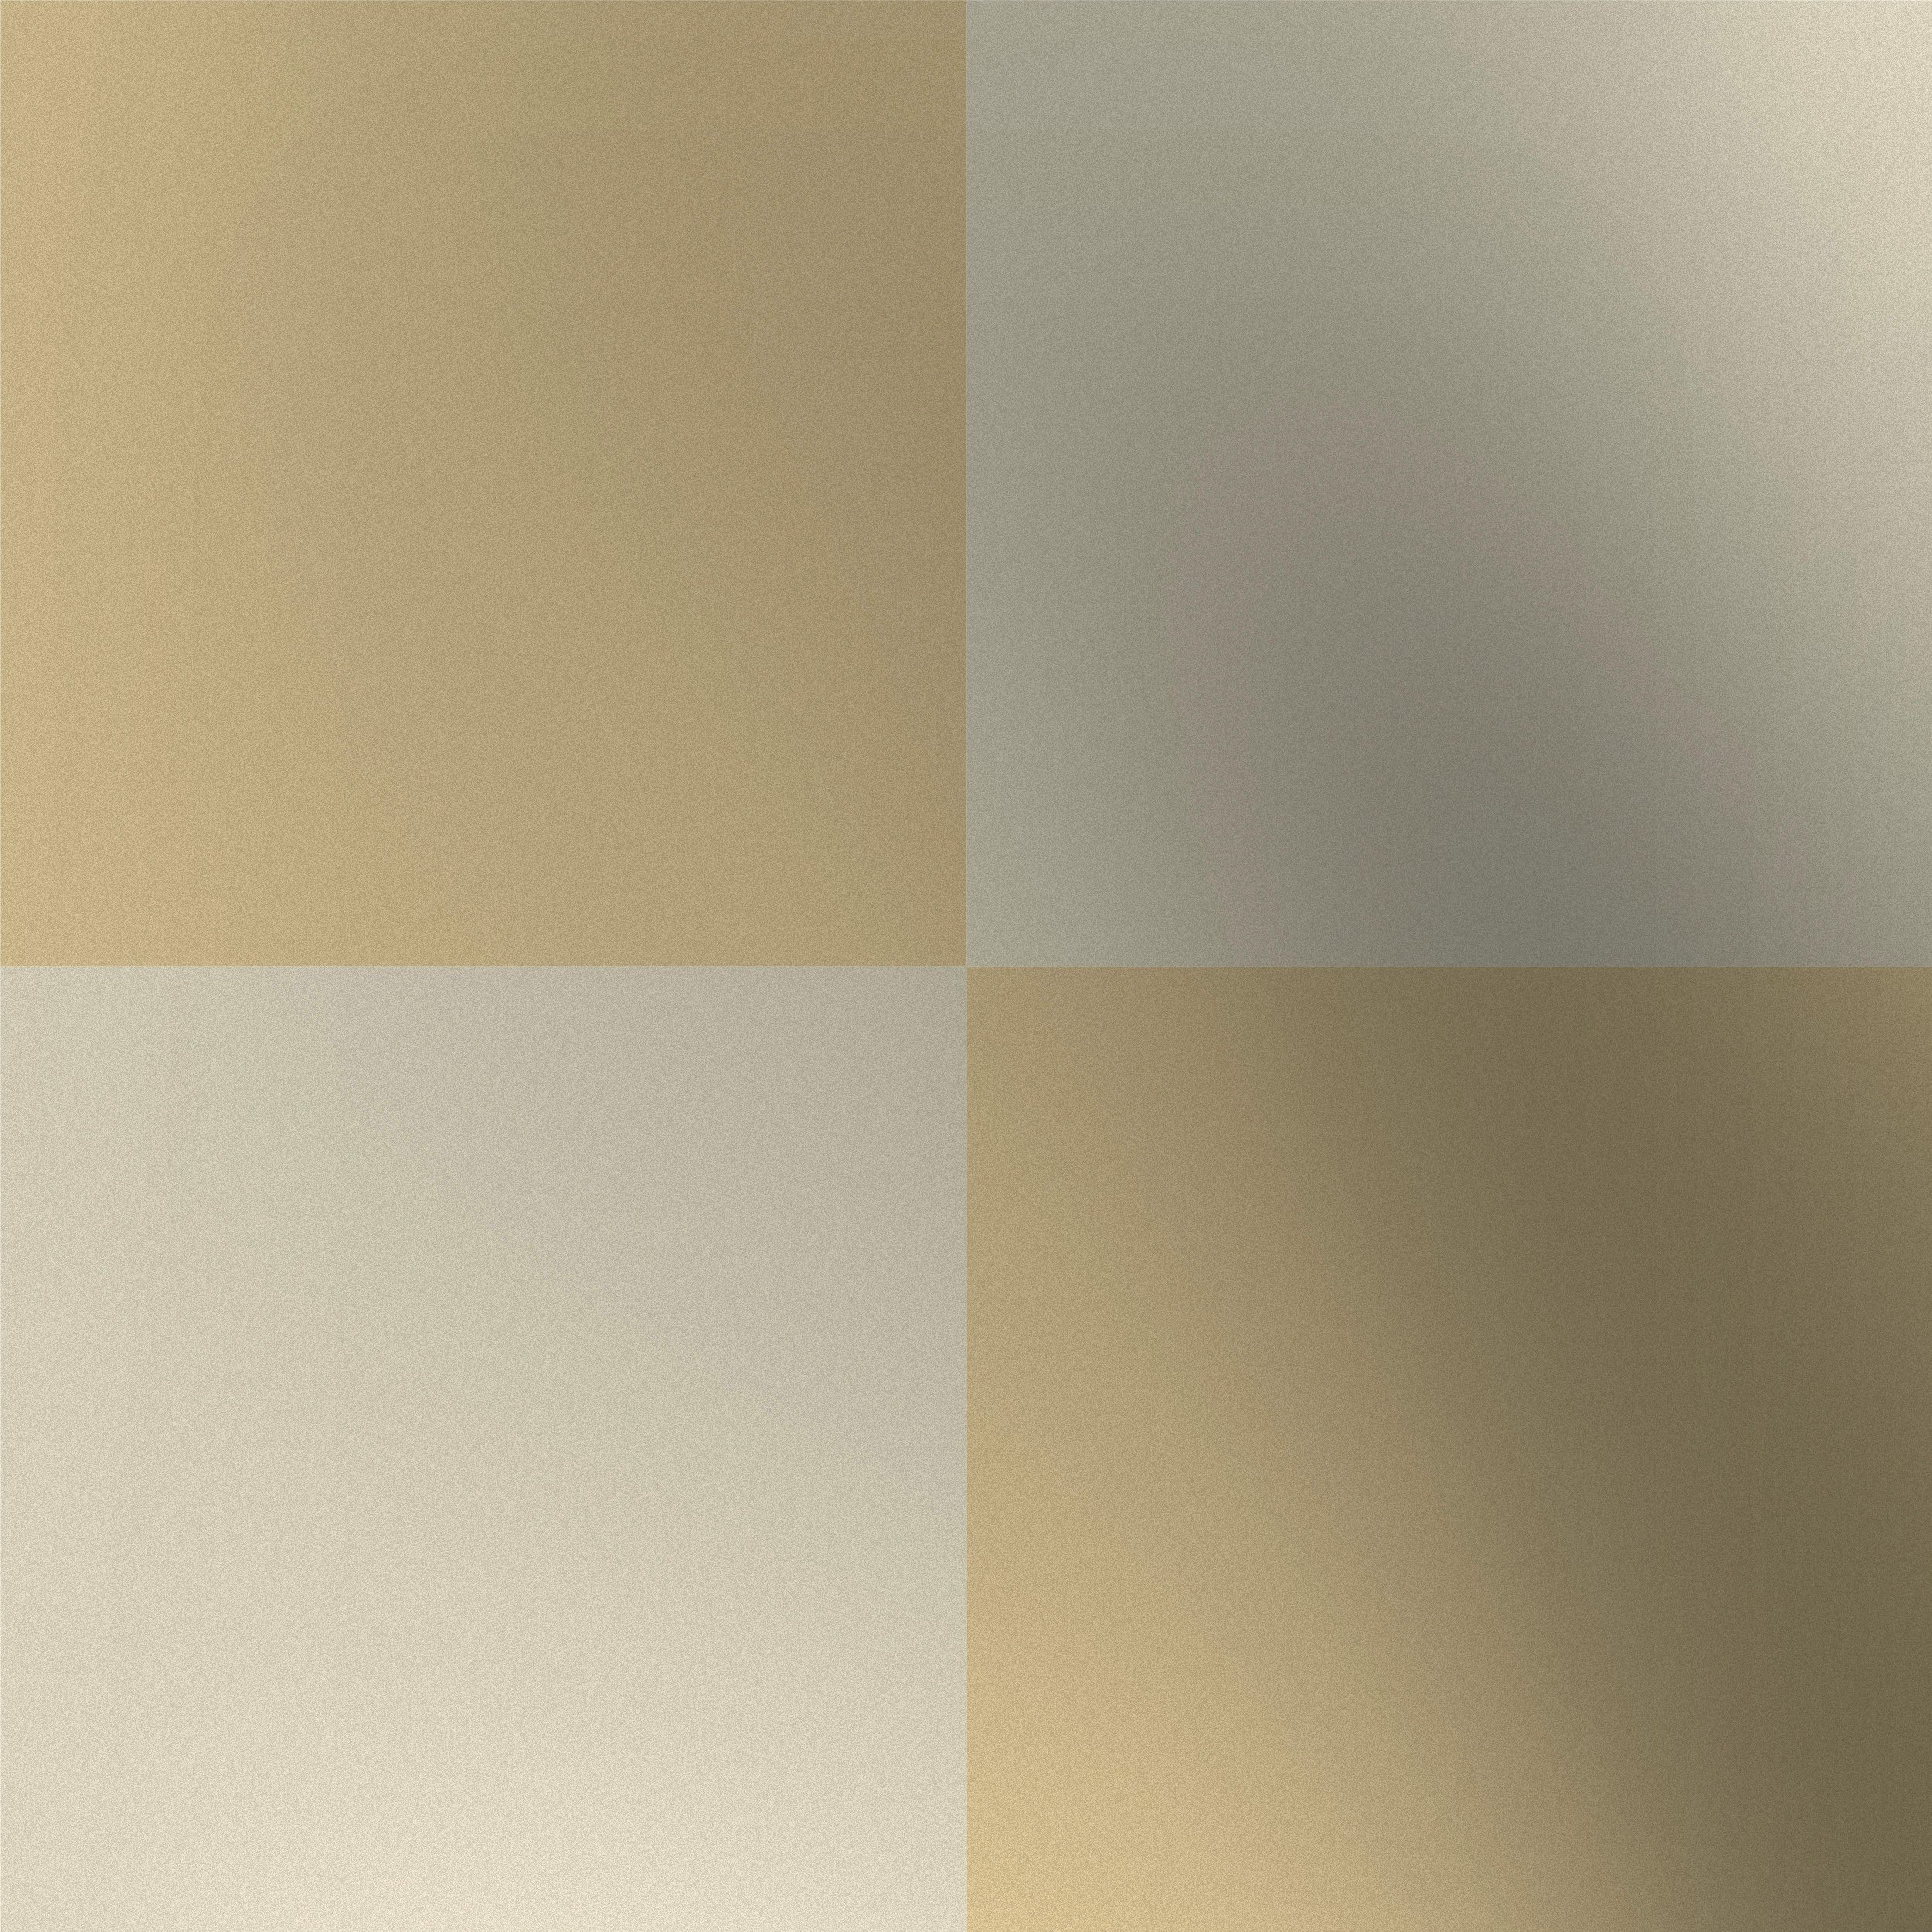 072322-28-15_JumboCheck_Metallic_Golden.jpg